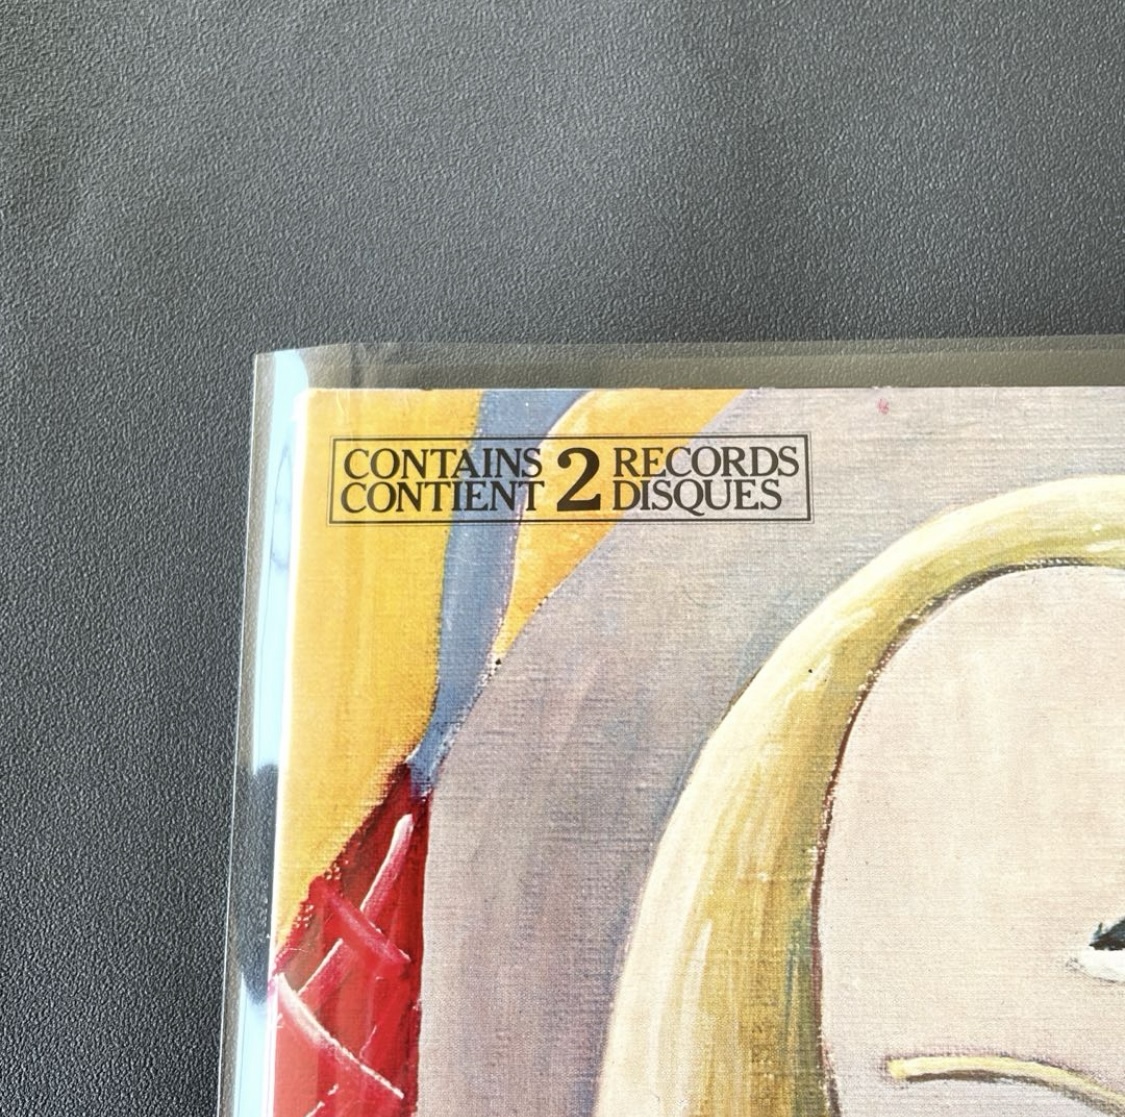 LP レコード 外袋 内袋 lpレコード袋 ジャケット カバー 保護袋 ケース スリーブ アナログ 透明カバー 収納 レコードビニール袋 50枚セット